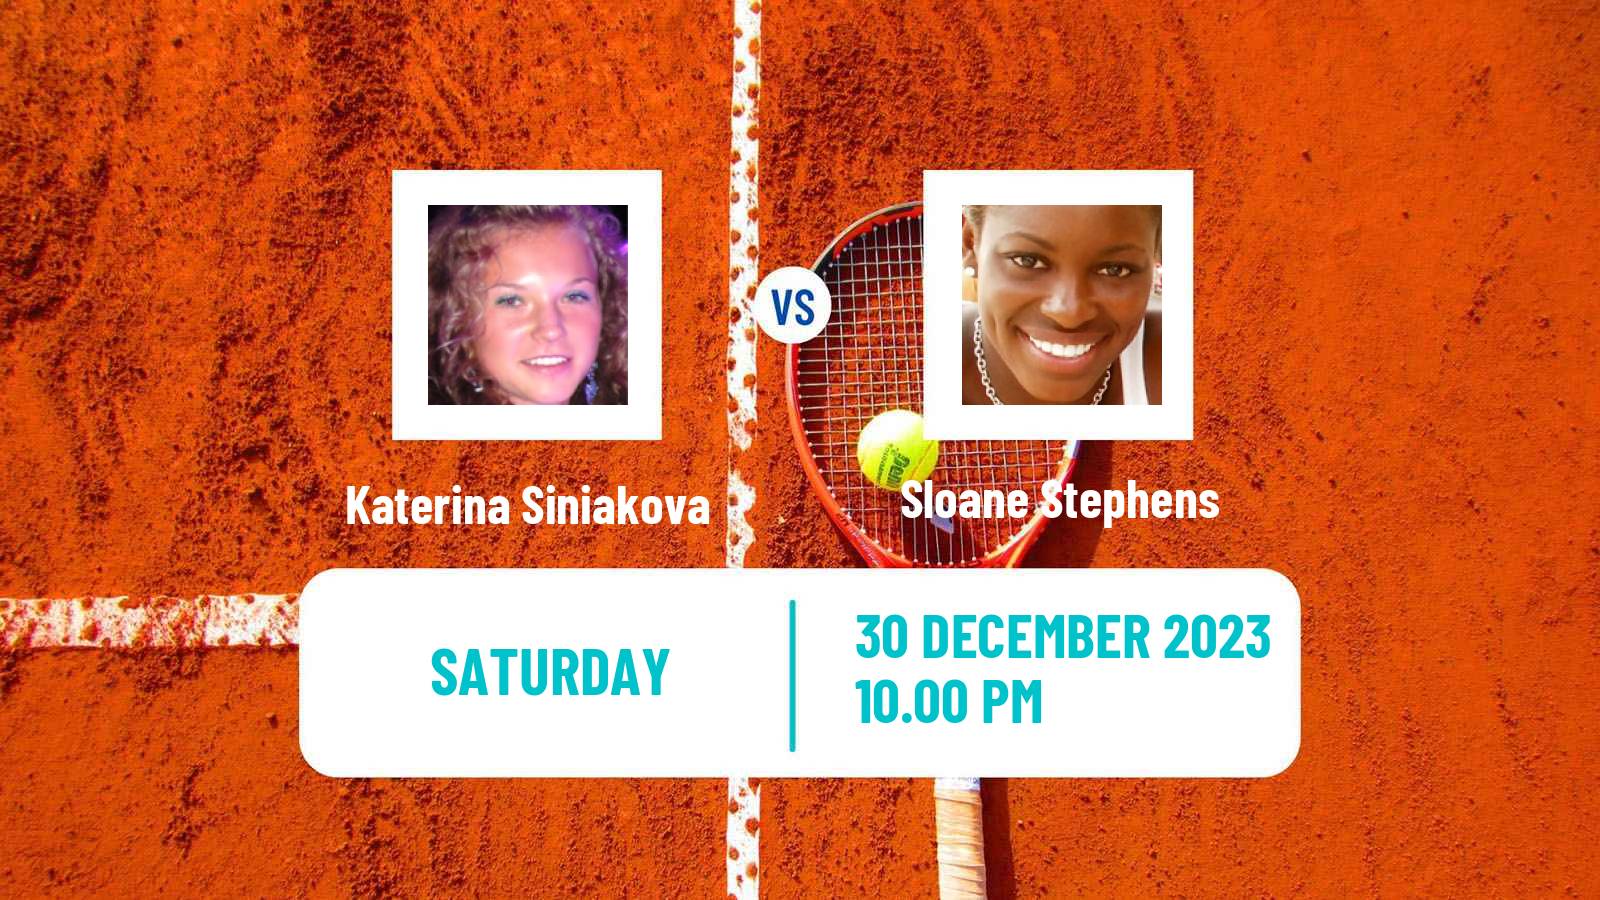 Tennis WTA Brisbane Katerina Siniakova - Sloane Stephens